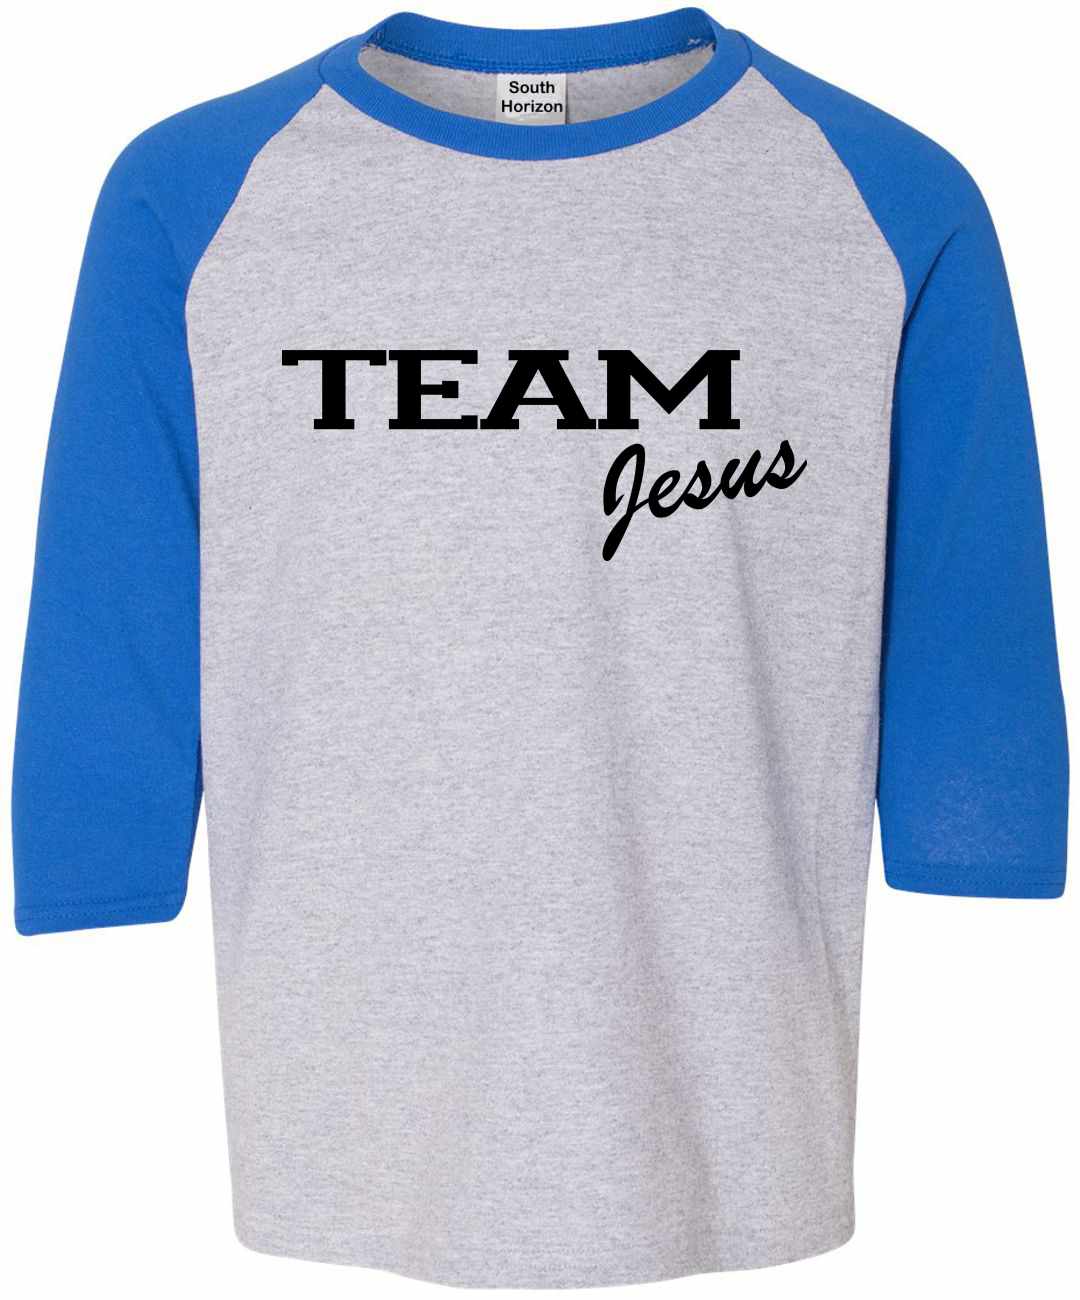 TEAM Jesus on Youth Baseball Shirt (#225-212)